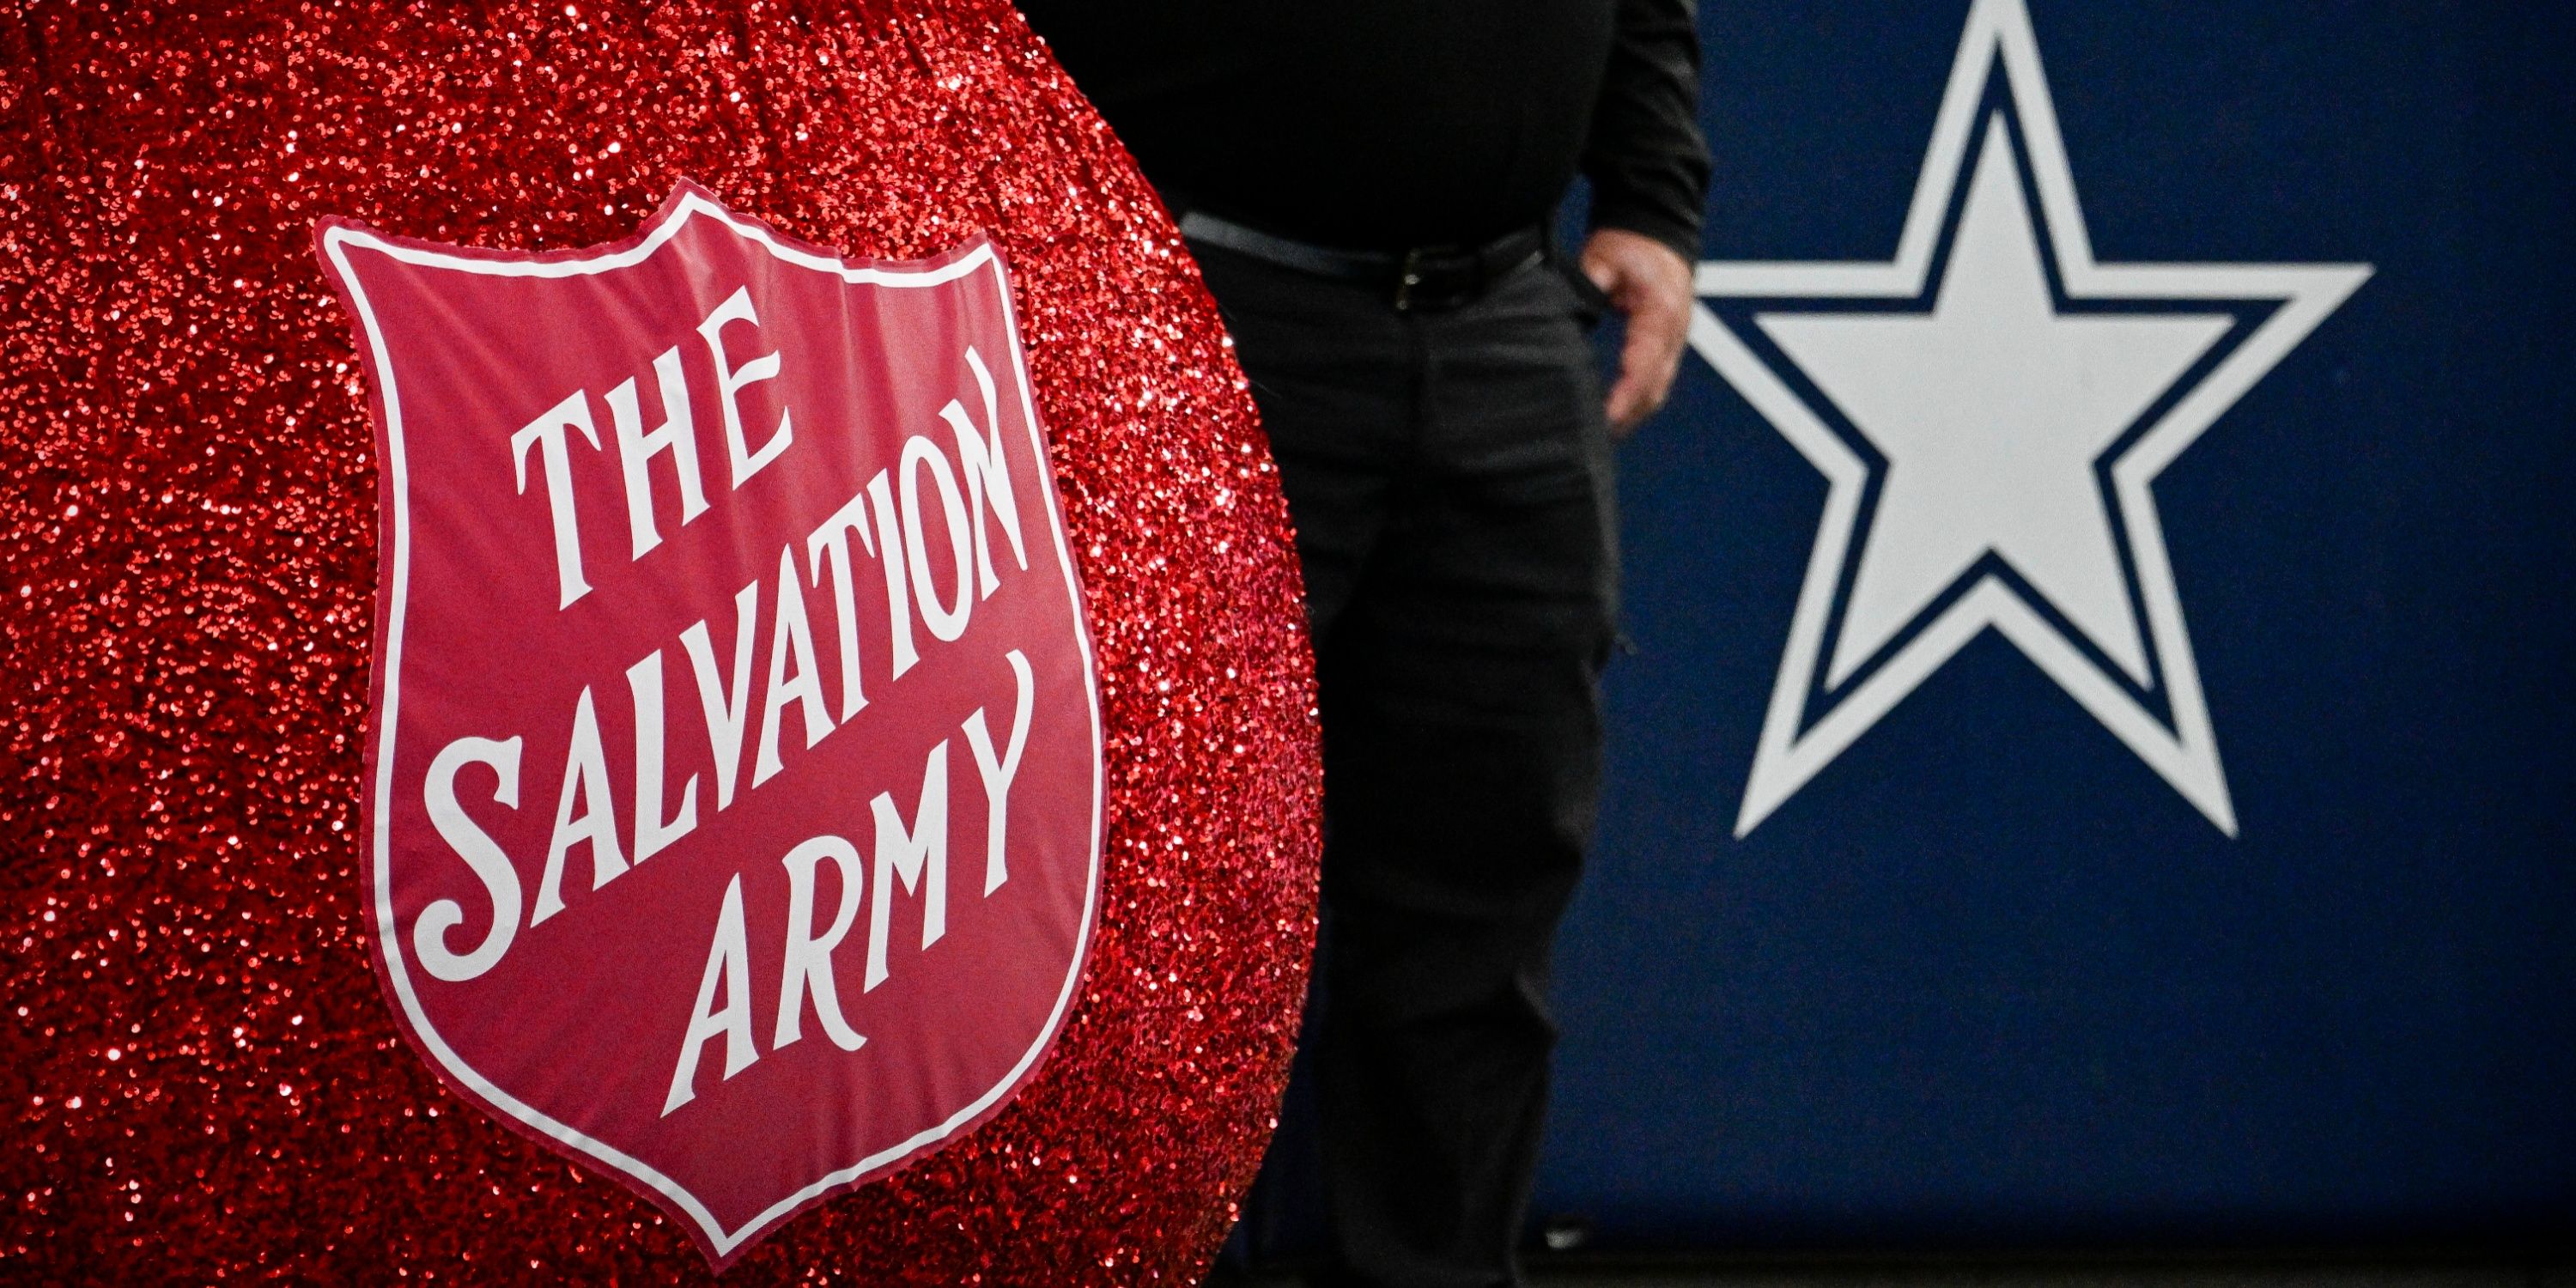 Dallas Cowboys Salvation Army kettle